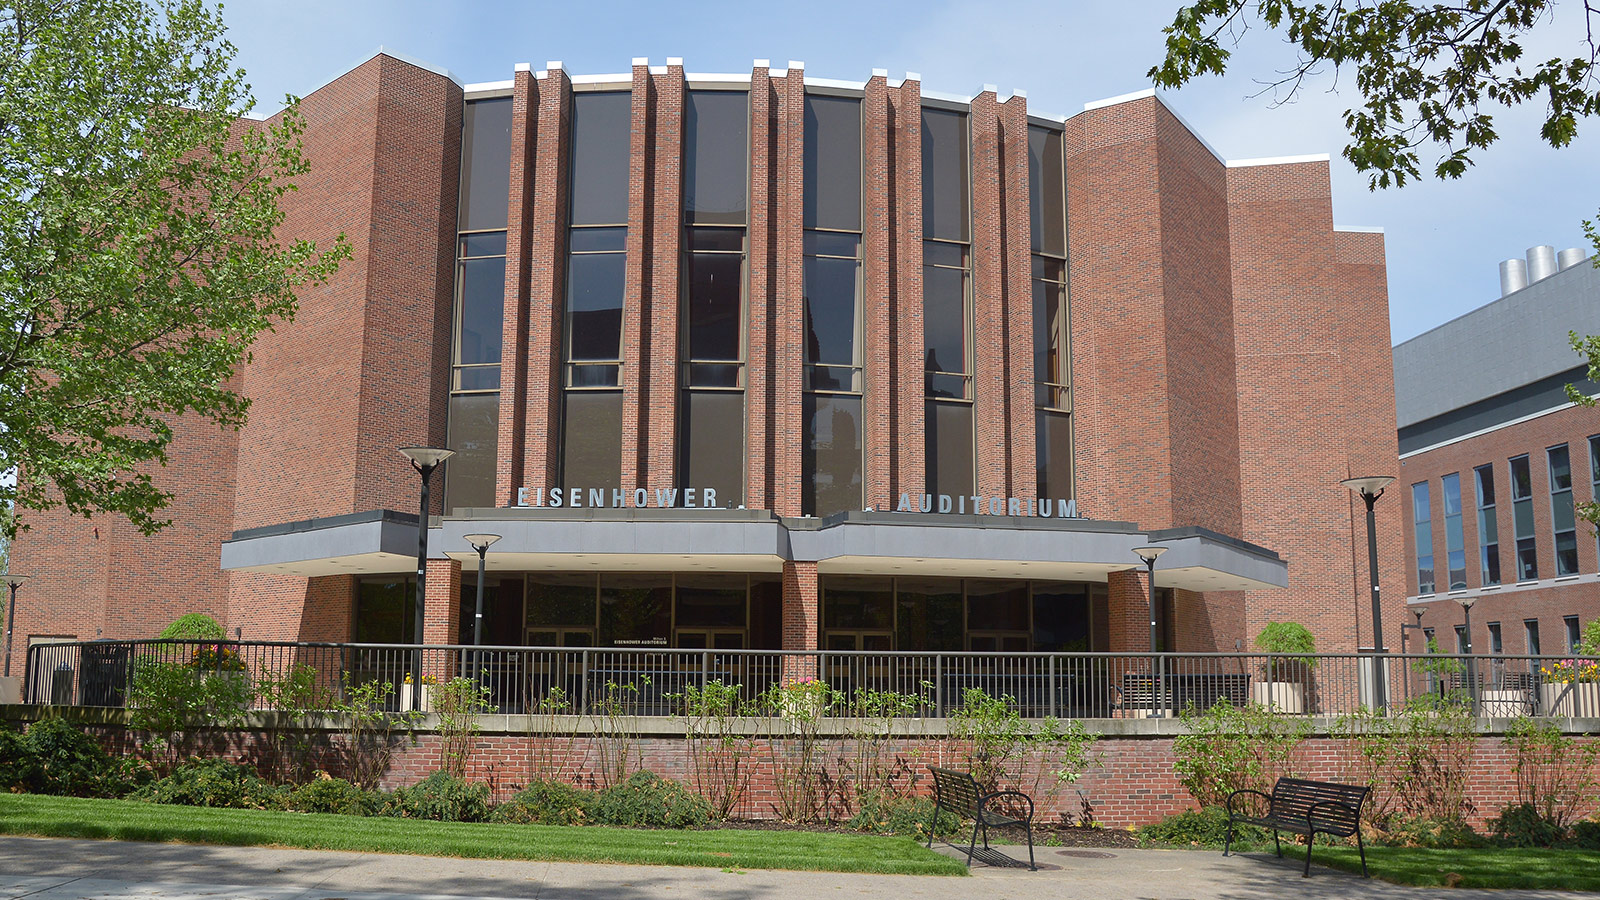 Penn State University’s Eisenhower Auditorium Welcomes New Era with Meyer Sound LEO Family